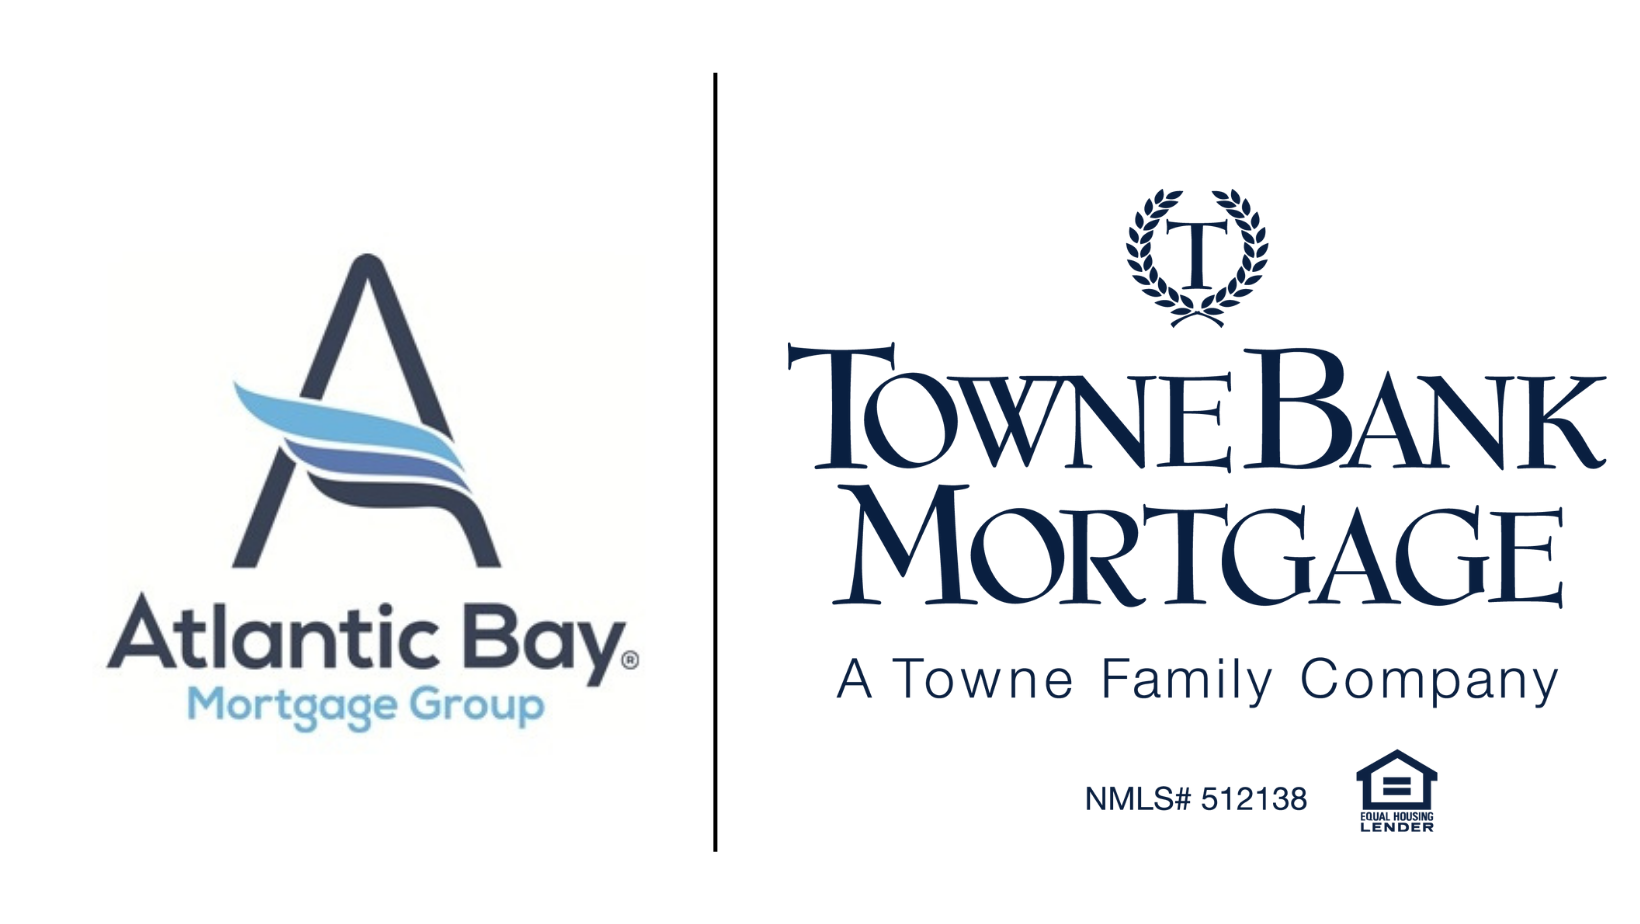 PARTNER SPOTLIGHT: Atlantic Bay Mortgage Group & Towne Bank Mortgage